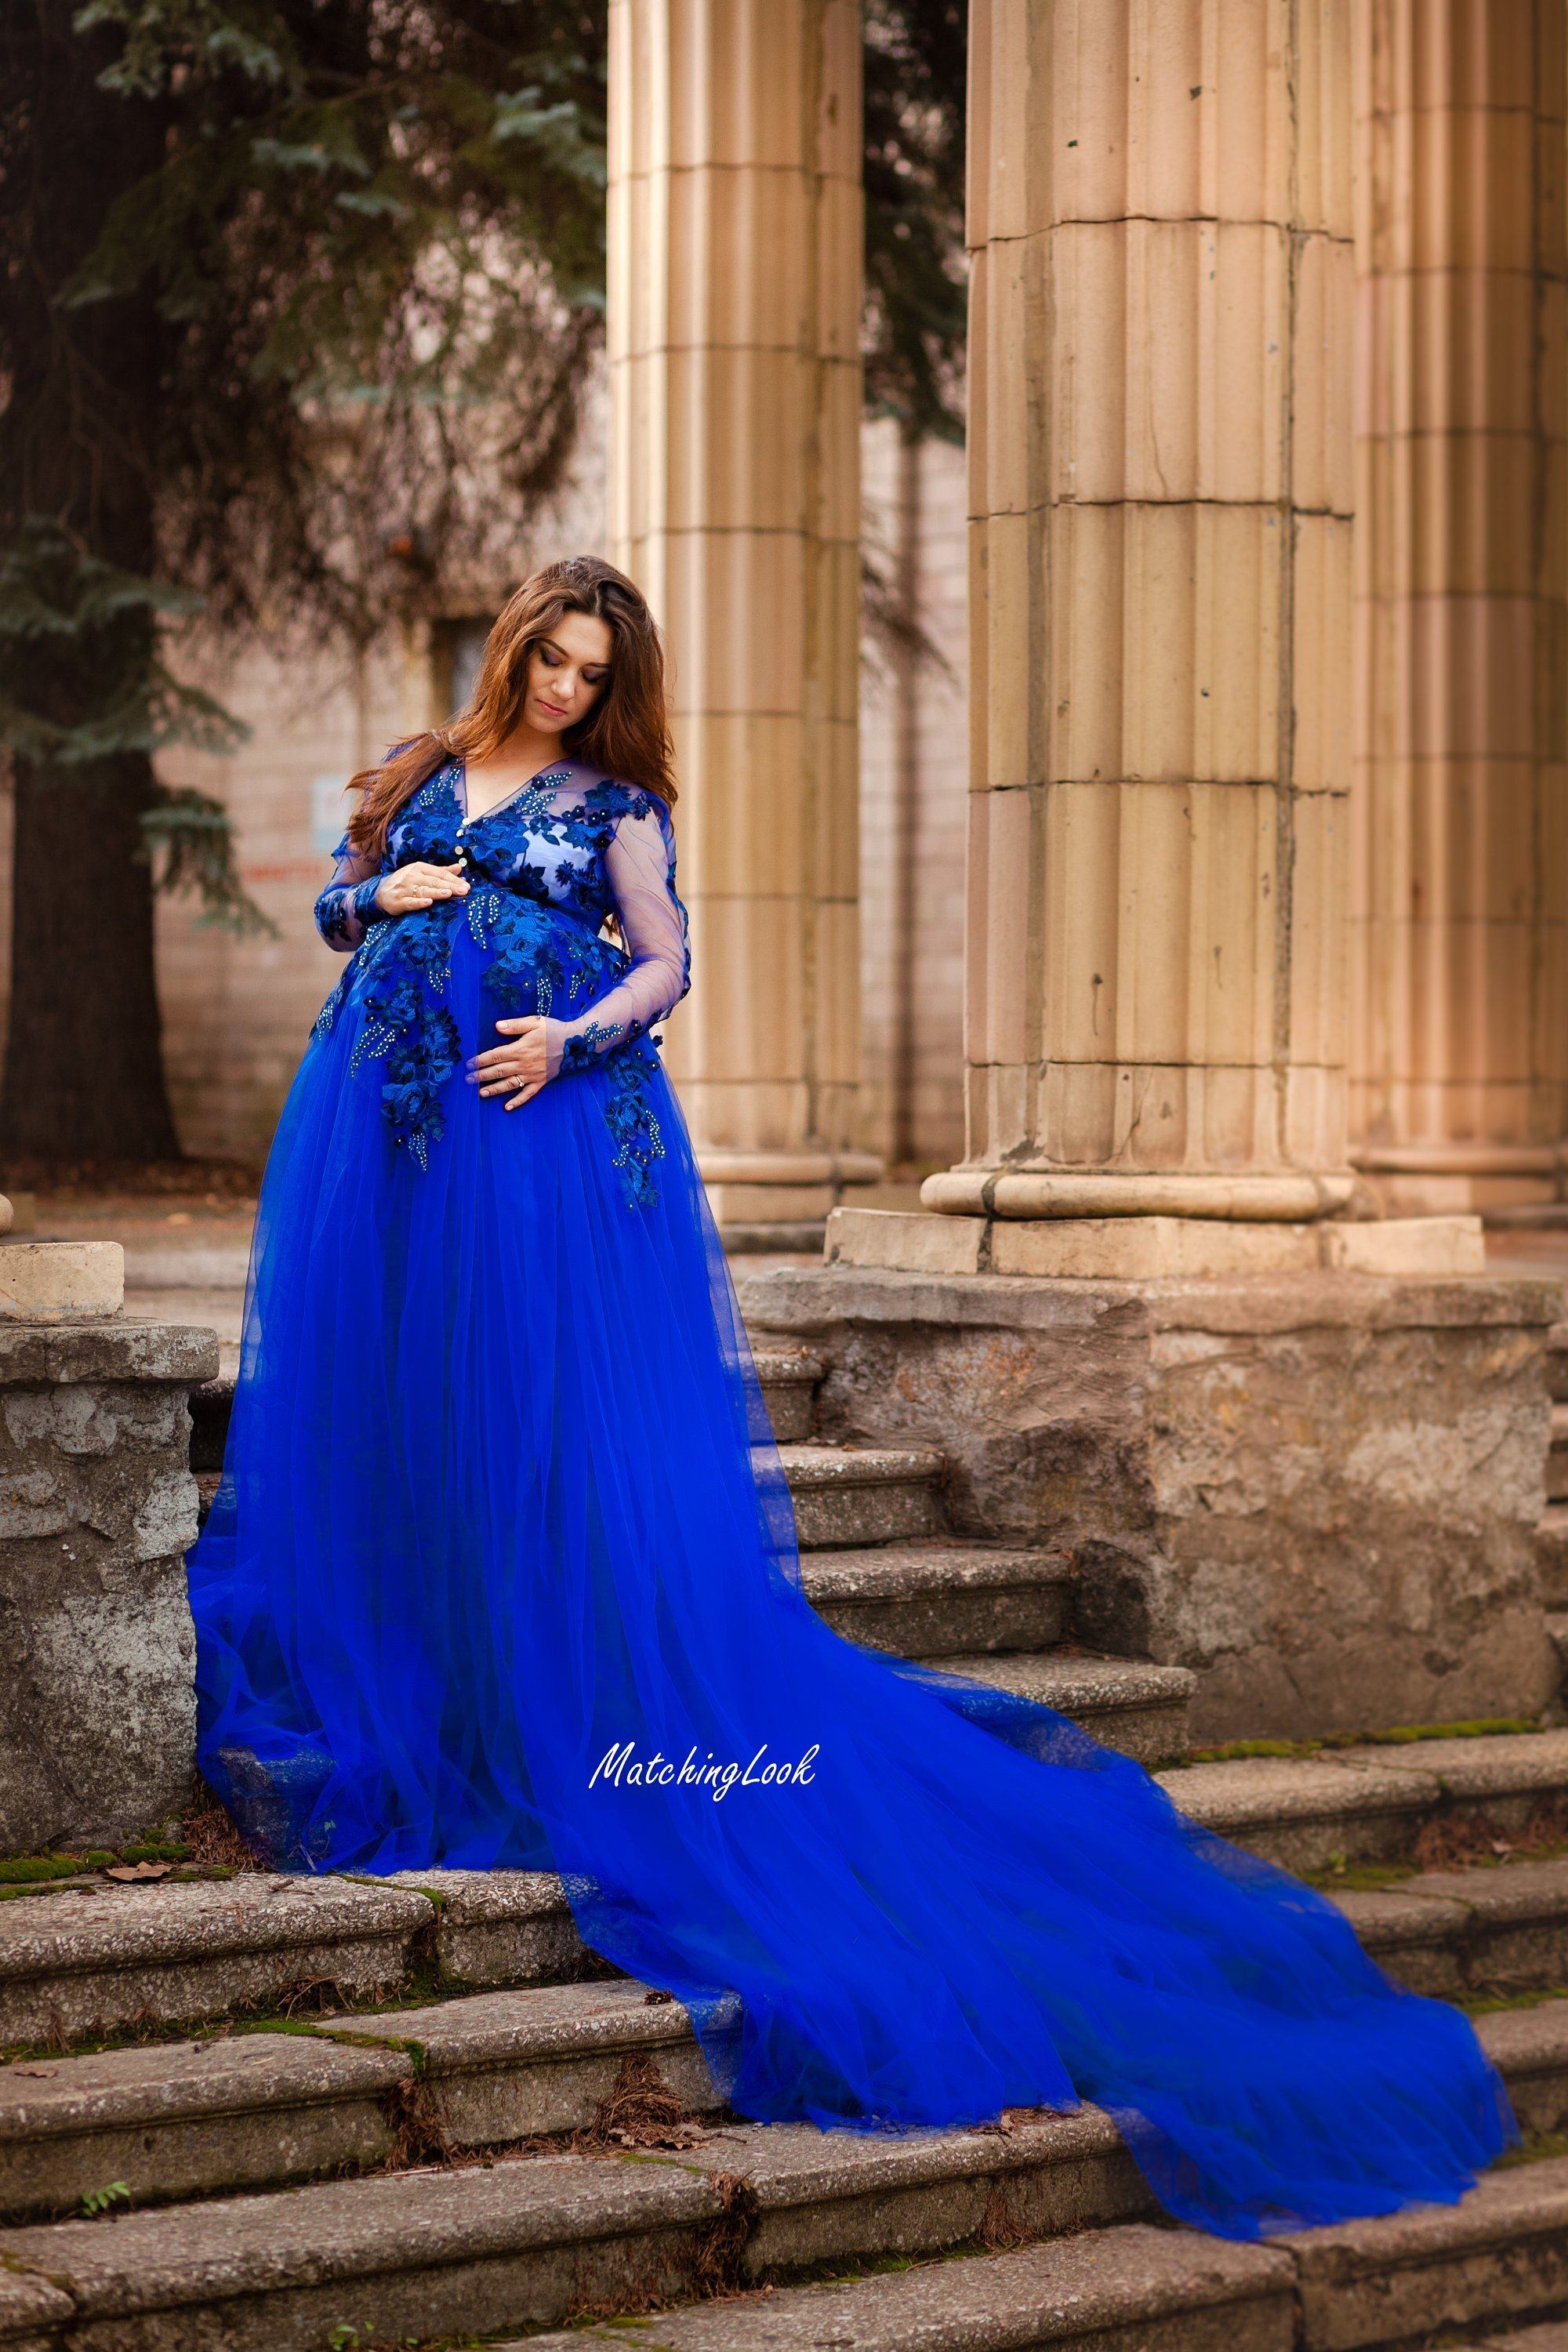 Royal Blue Maternity Dress, Photo Prop ...